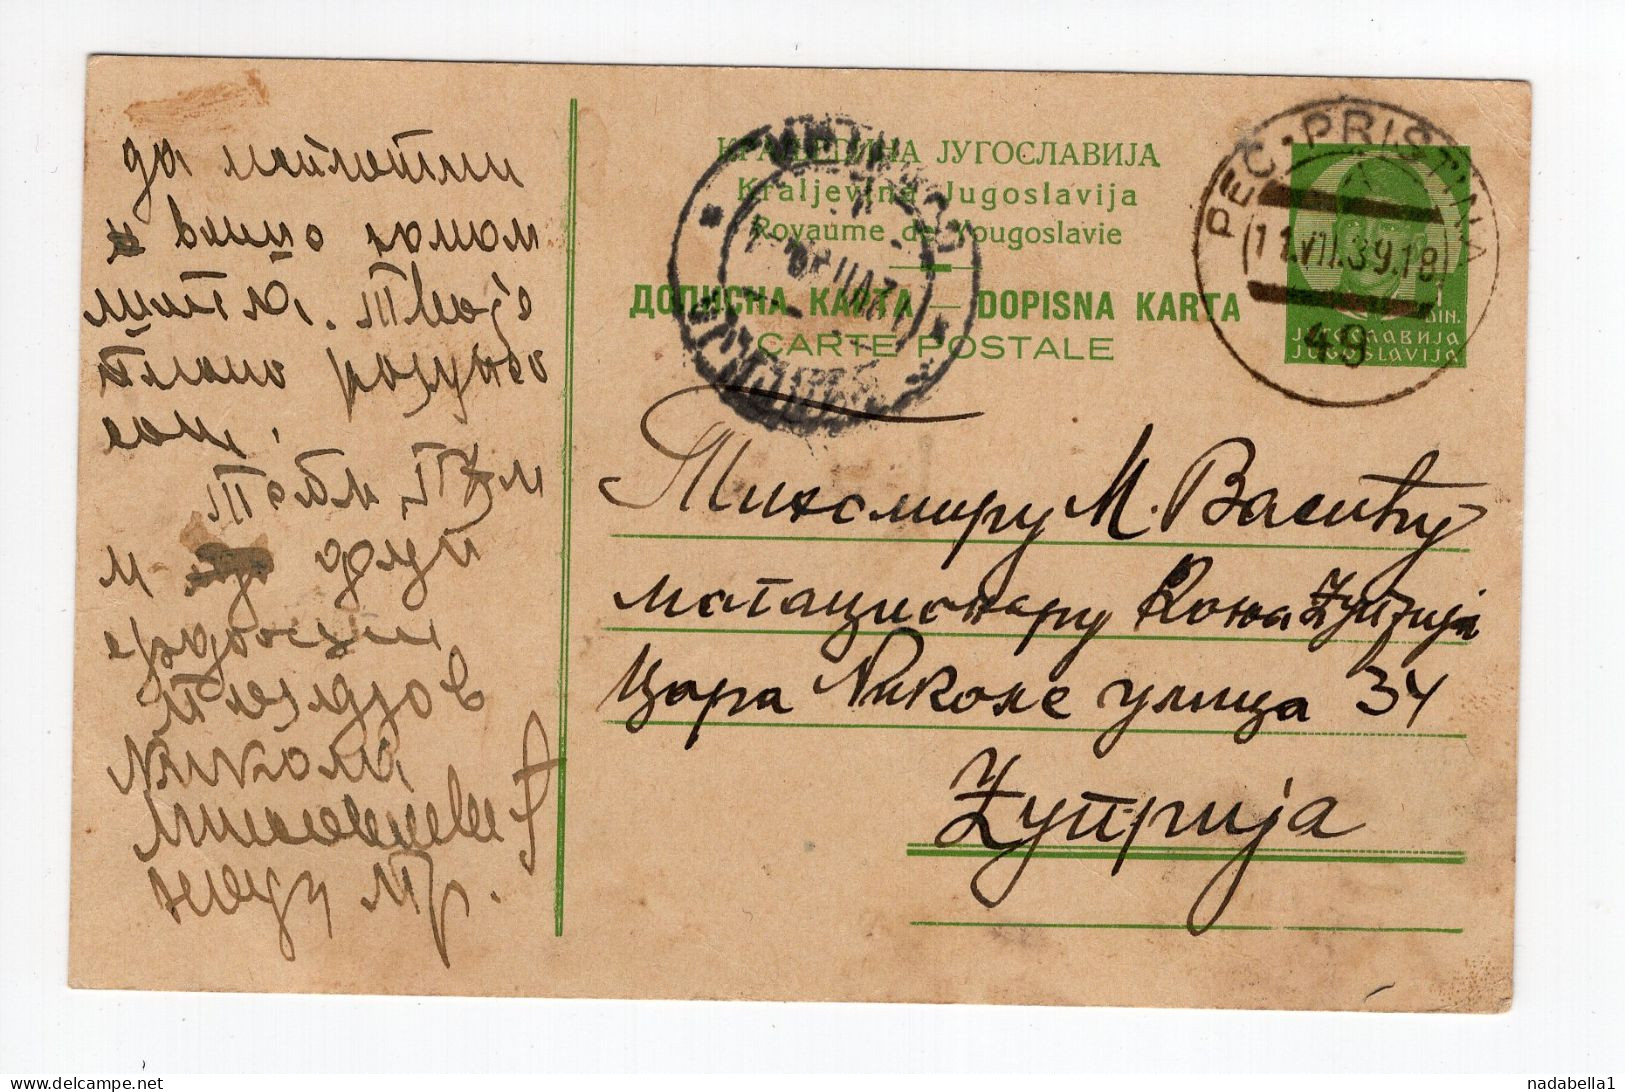 1939. KINGDOM OF YUGOSLAVIA,SERBIA,PEC,TPO 49 PEC - PRISTINA,STATIONERY CARD USED TO CUPRIJA - Entiers Postaux